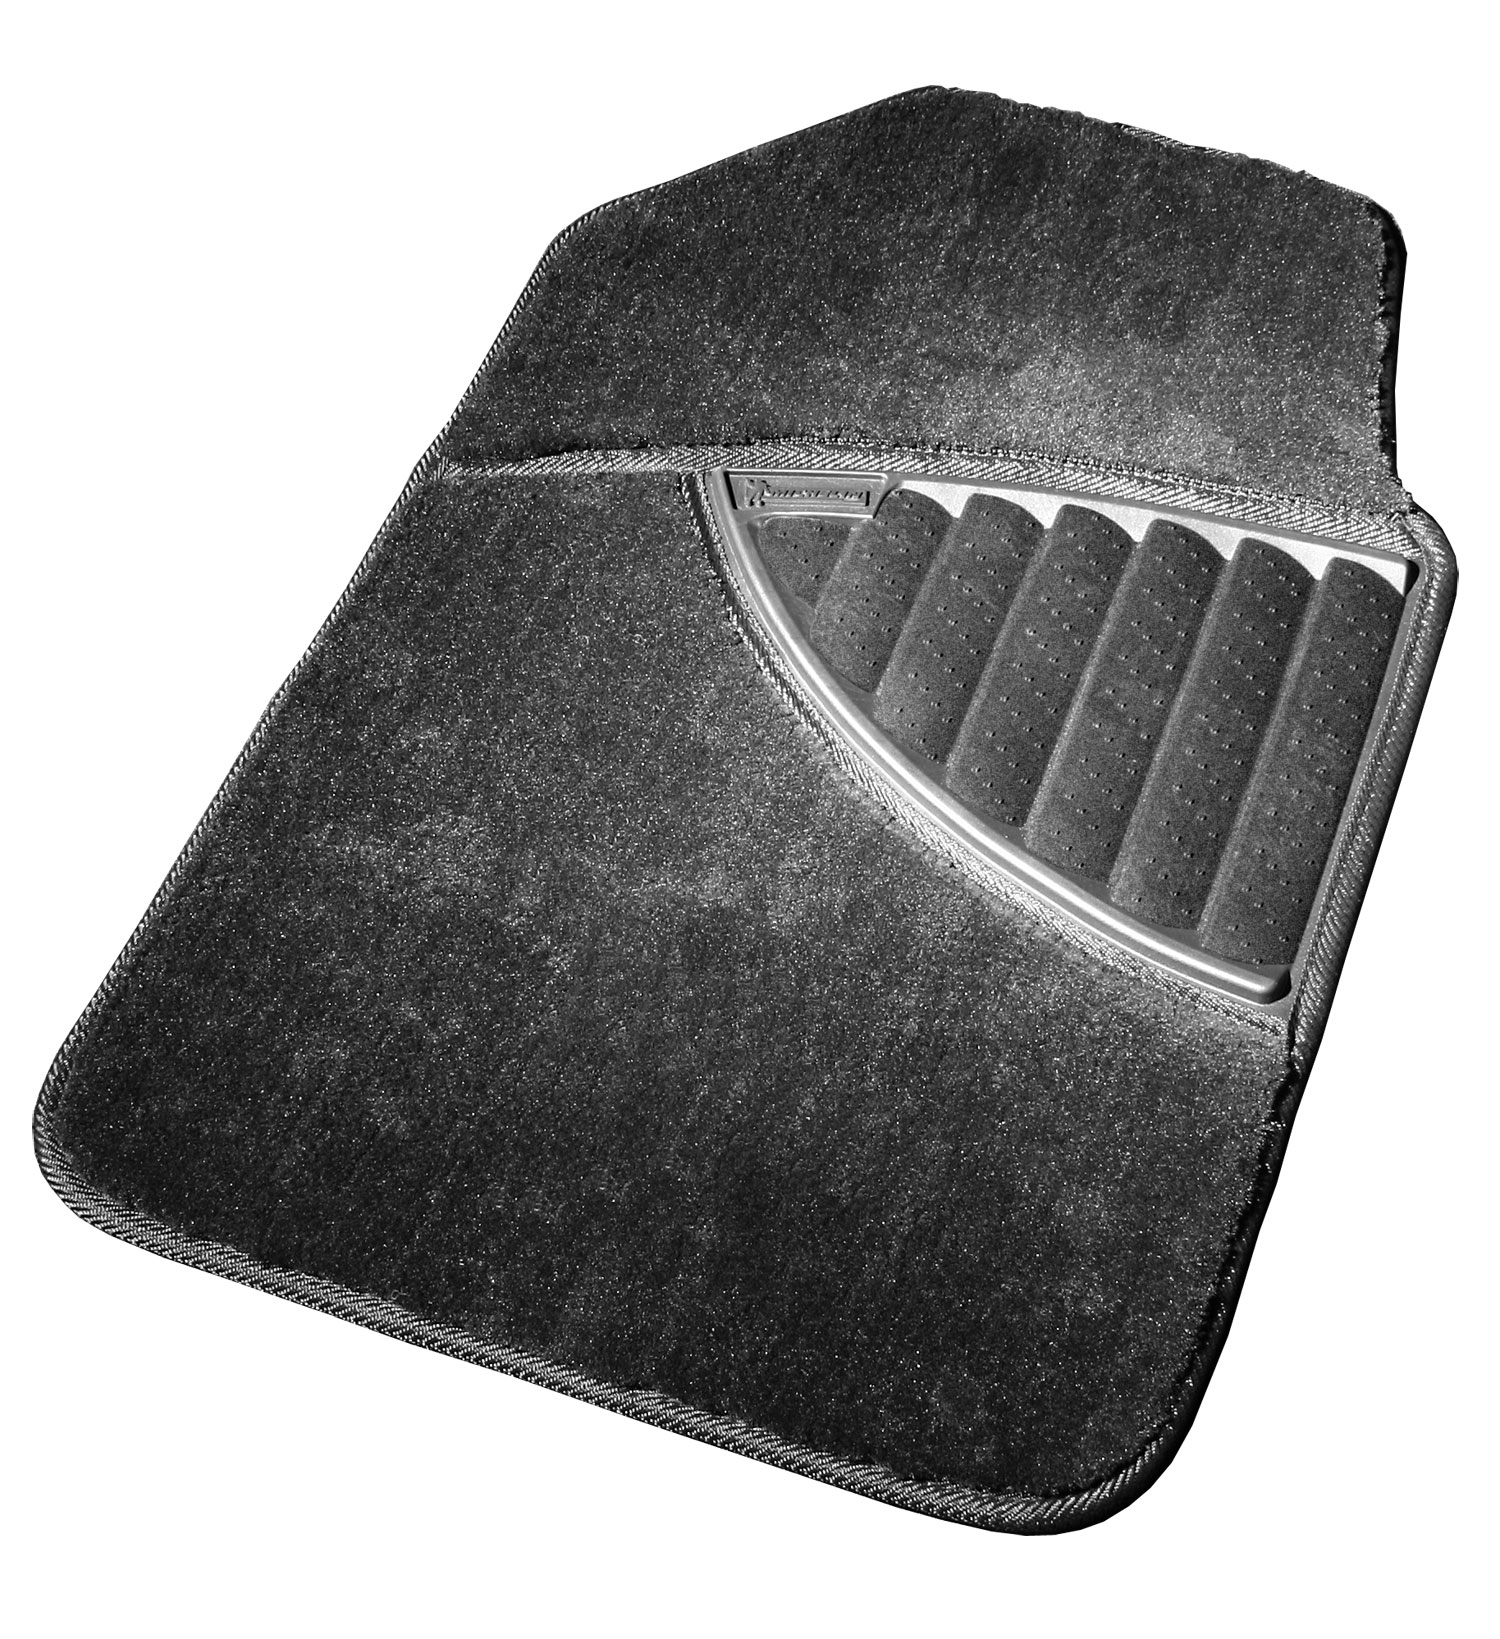 https://www.mldirectbuy.com/wp-content/uploads/2020/04/928-BLK_Michelin-Car-Mats-Premium-Carpet-with-Rubber-Heel-Pad-4-pcs-set_moody.jpg